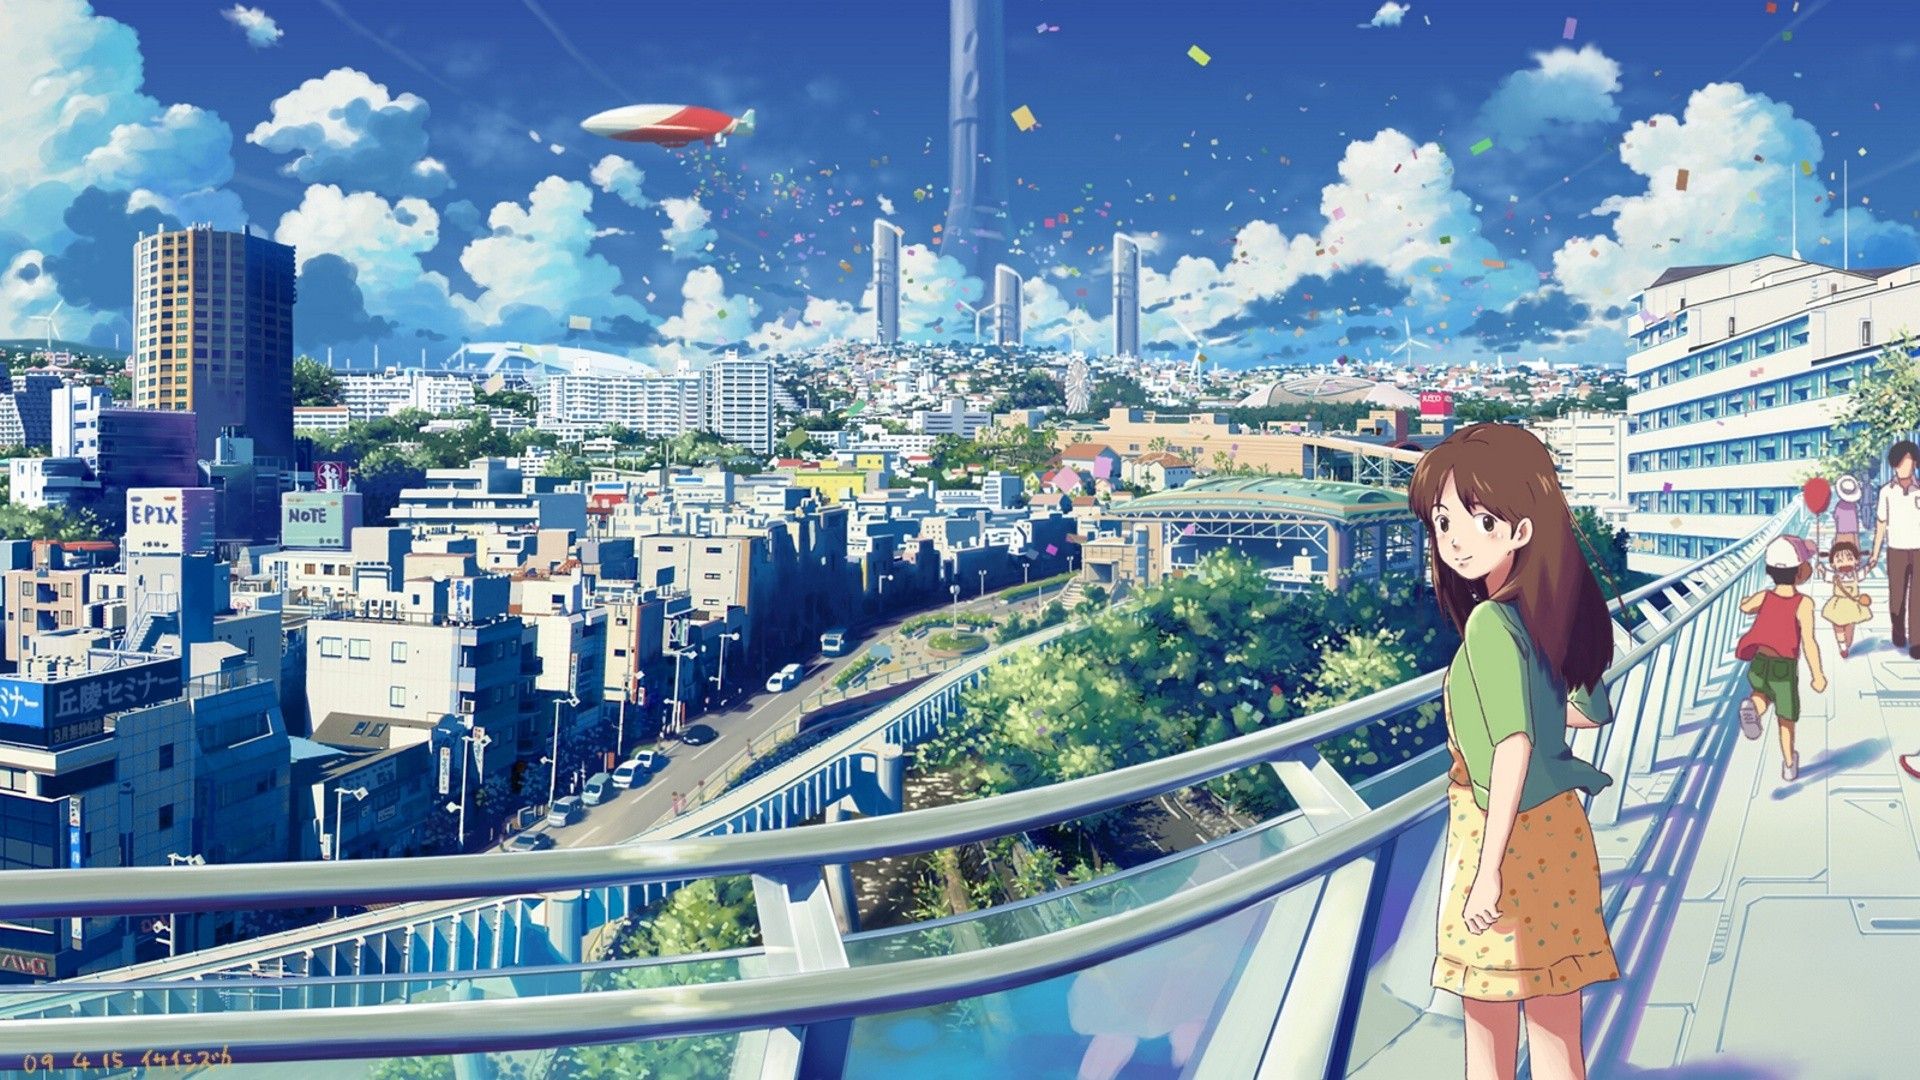 #Japan, #cityscape, #landscape, #anime, #anime girls